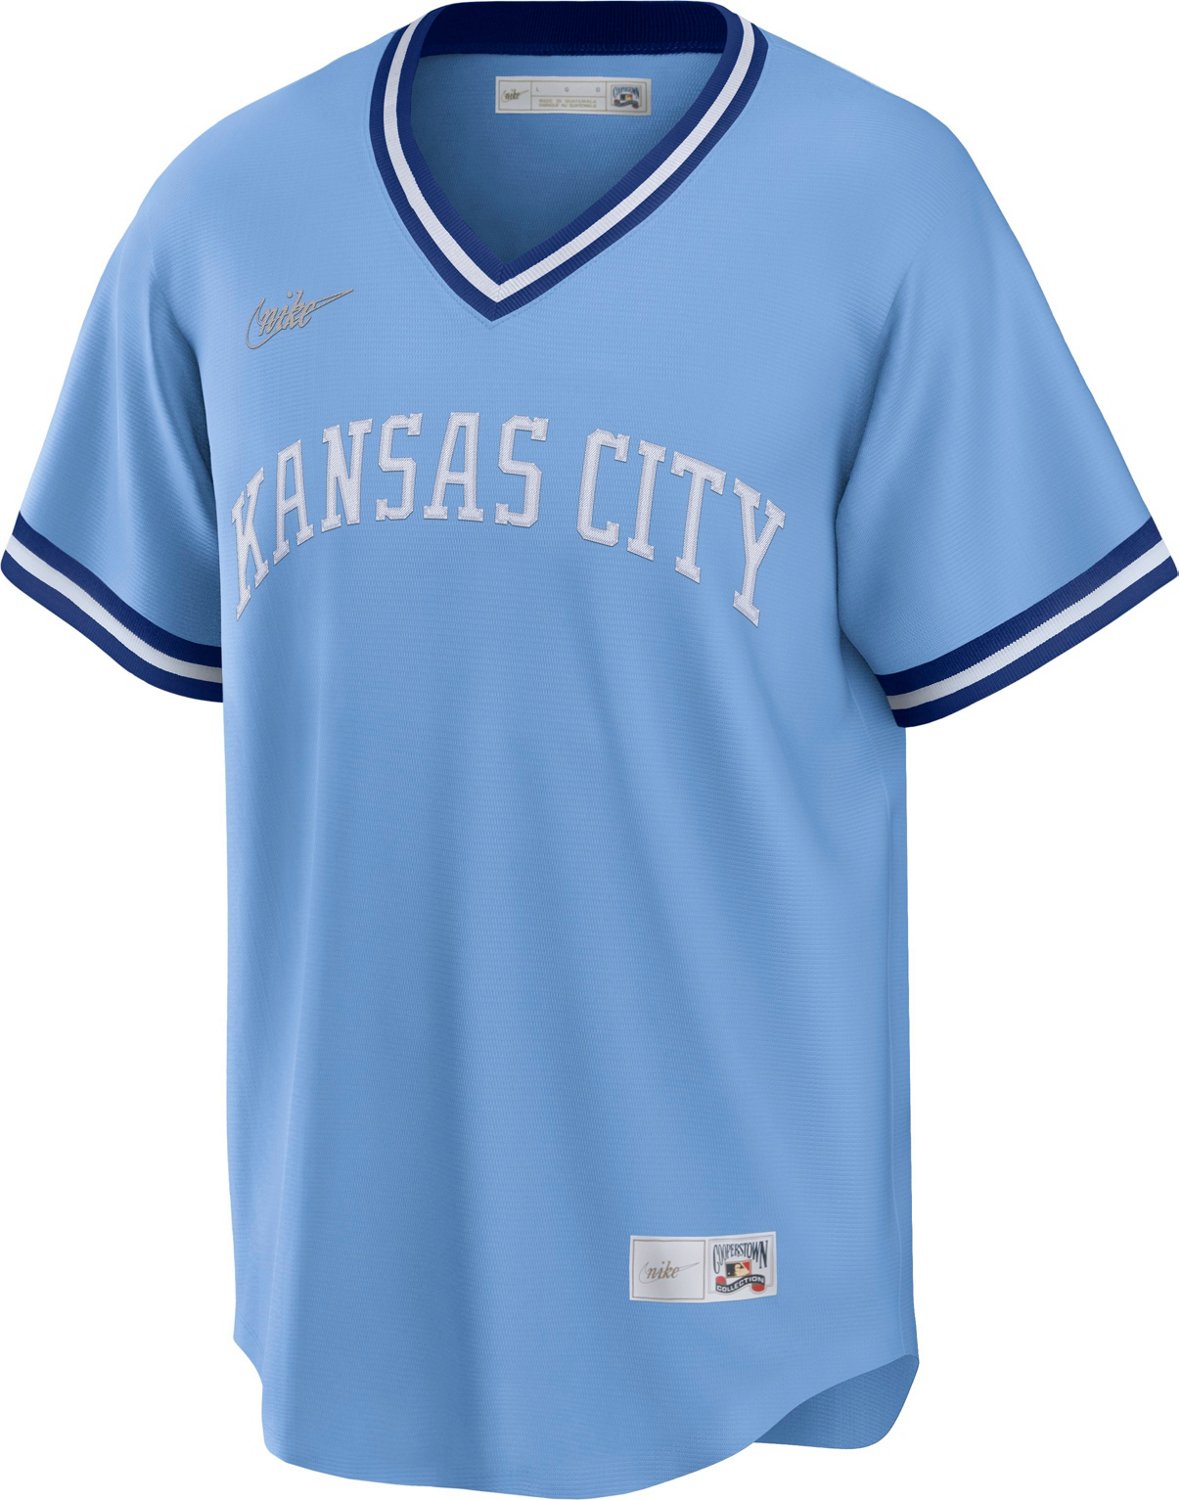 Nike Men's Kansas City Royals Official Cooperstown Jersey